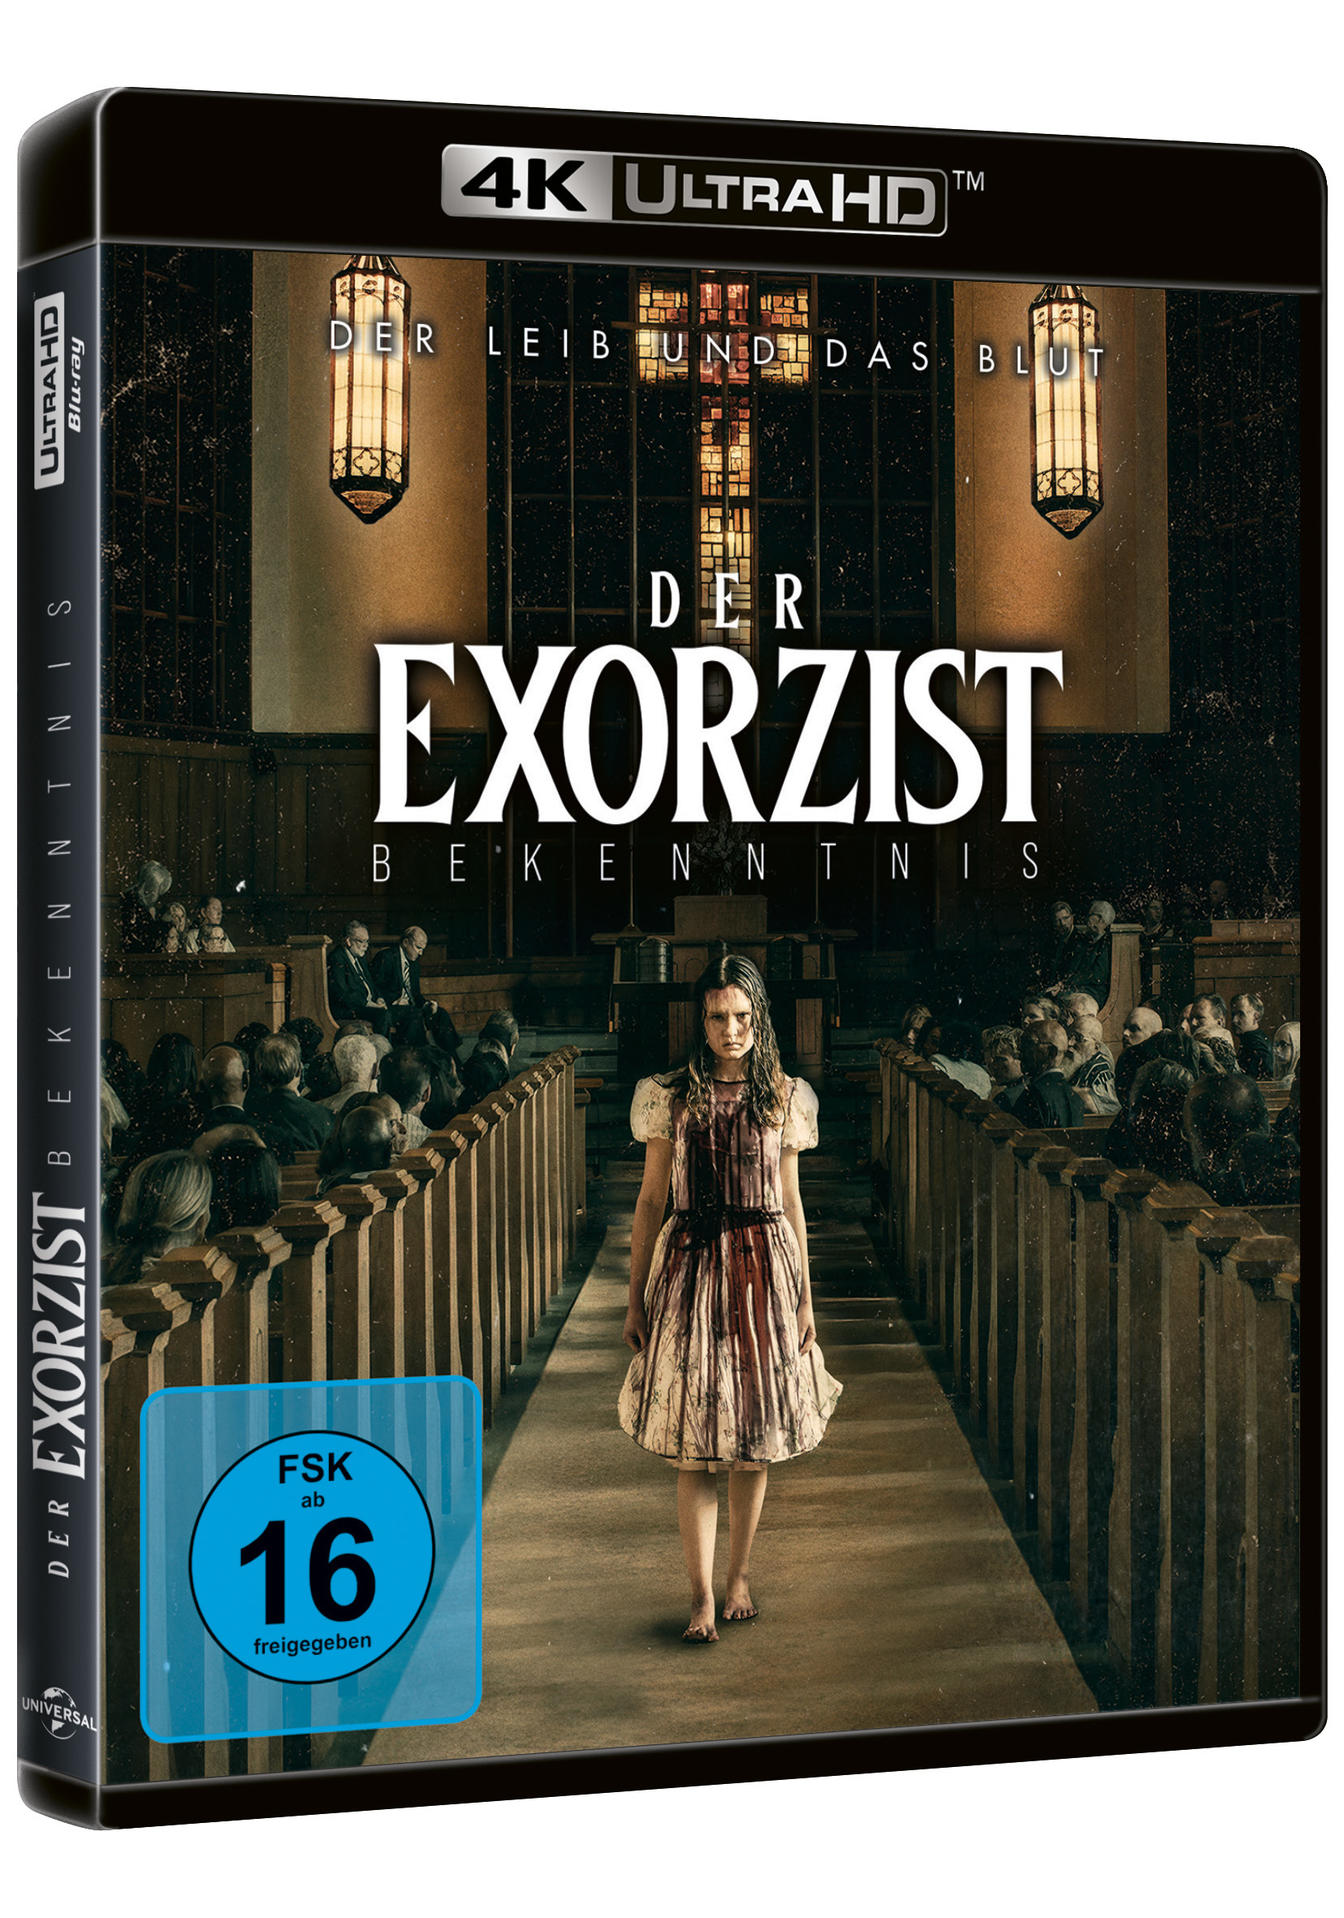 Der Exorzist: 4K Bekenntnis Blu-ray Ultra HD